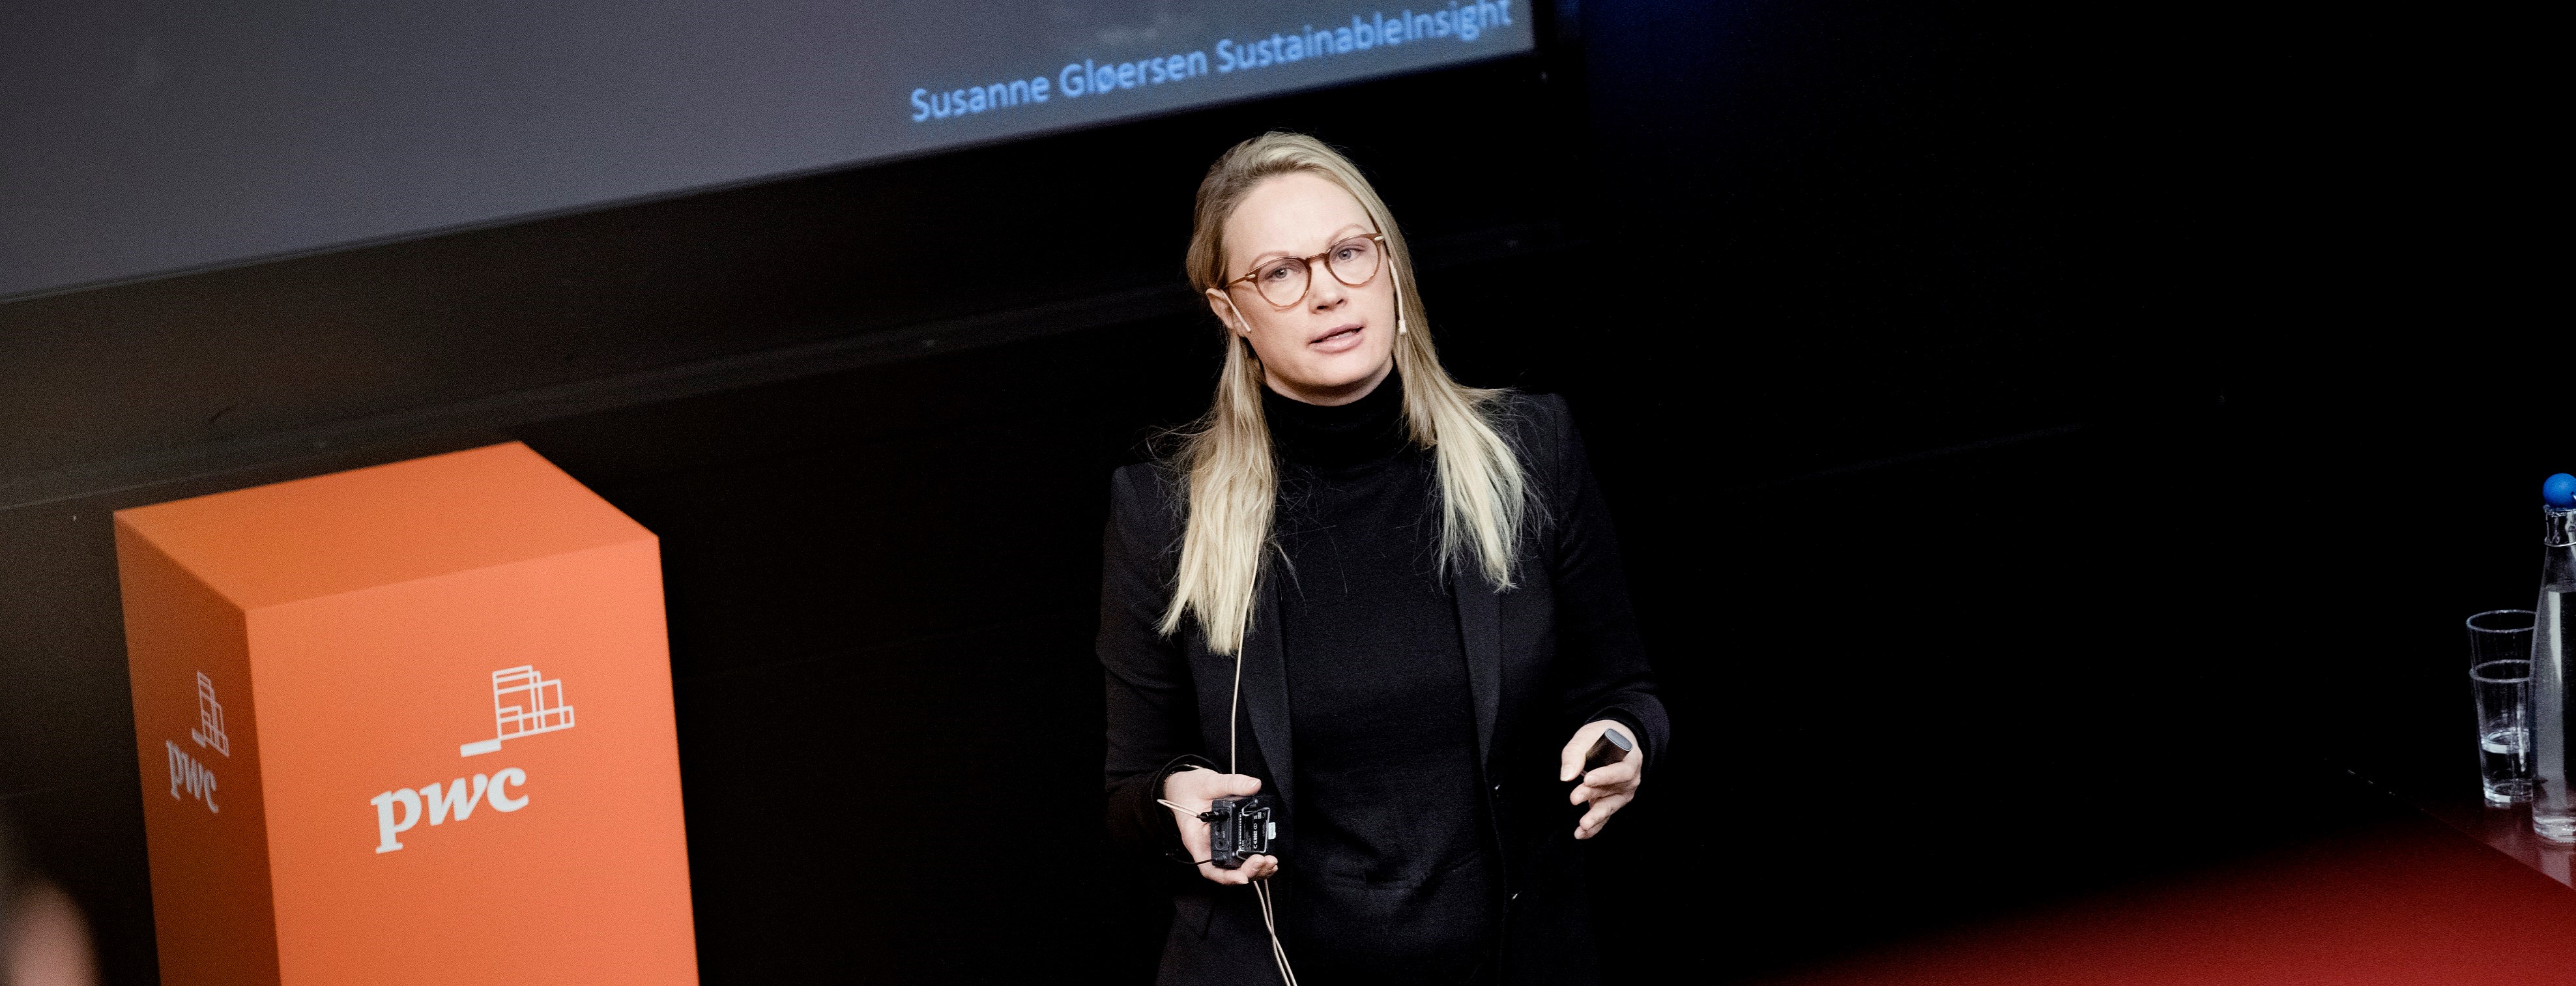 Susanne Gløersen in SustainableInsight and NHH alumna.